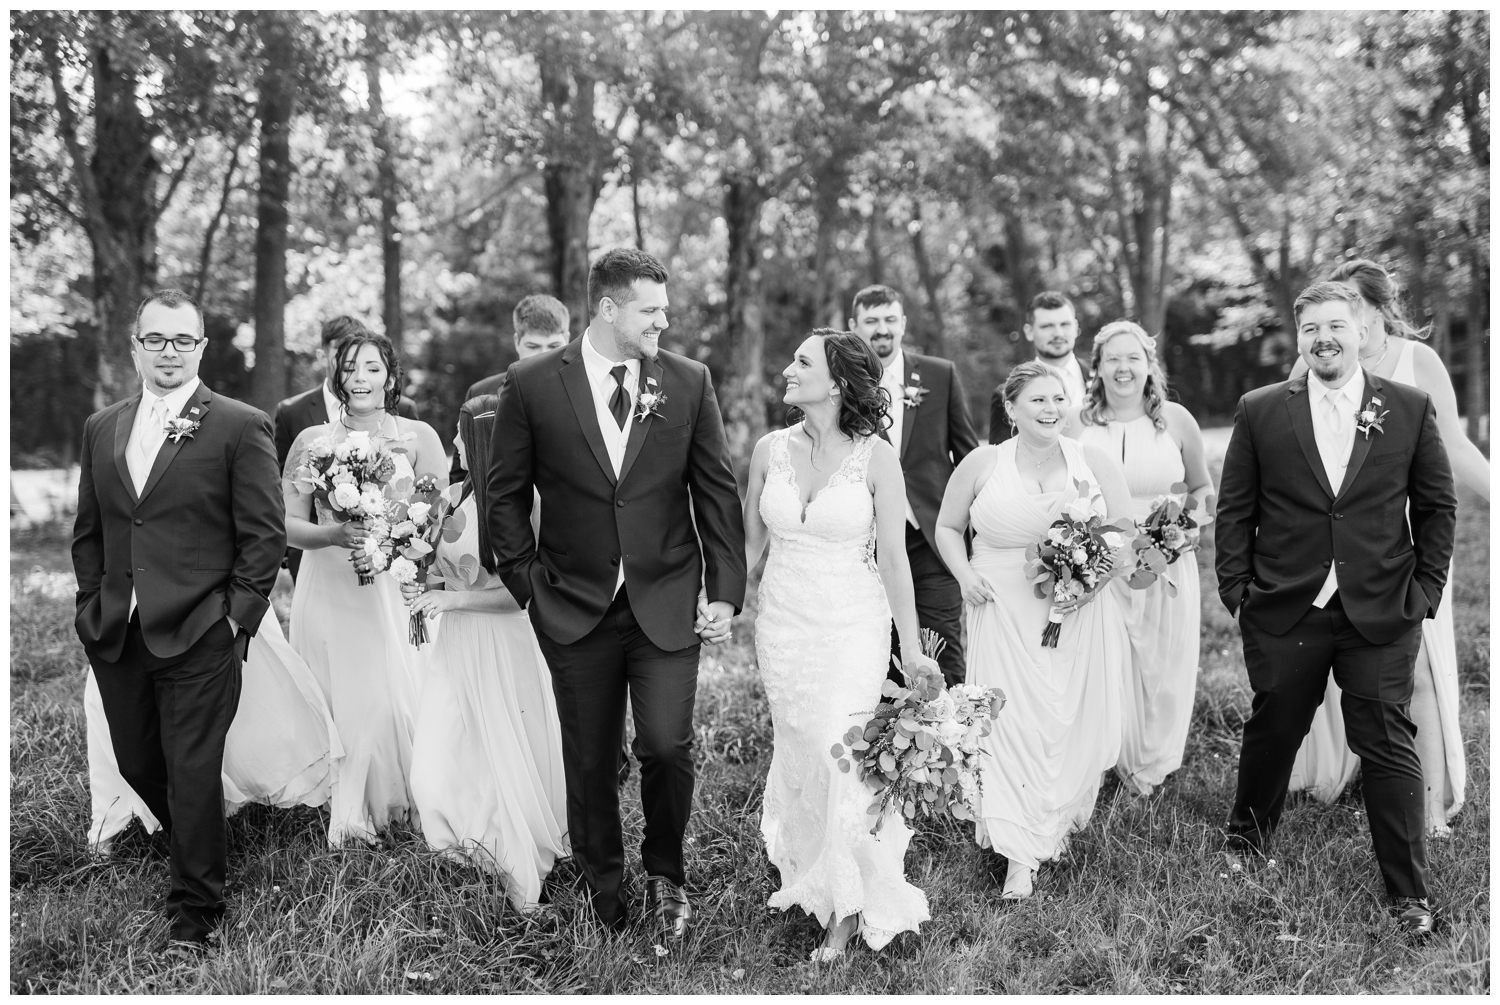 Fine Art New York Wedding Photographer - Hannah Bryerton Photography - Pennsylvania Fine Art Wedding Photographer,NWPA,NY Photographer,PA Venue,Pennsylvania Weddings,Tuck'd Inn Farm Wedding,WNY Wedding Photographer,